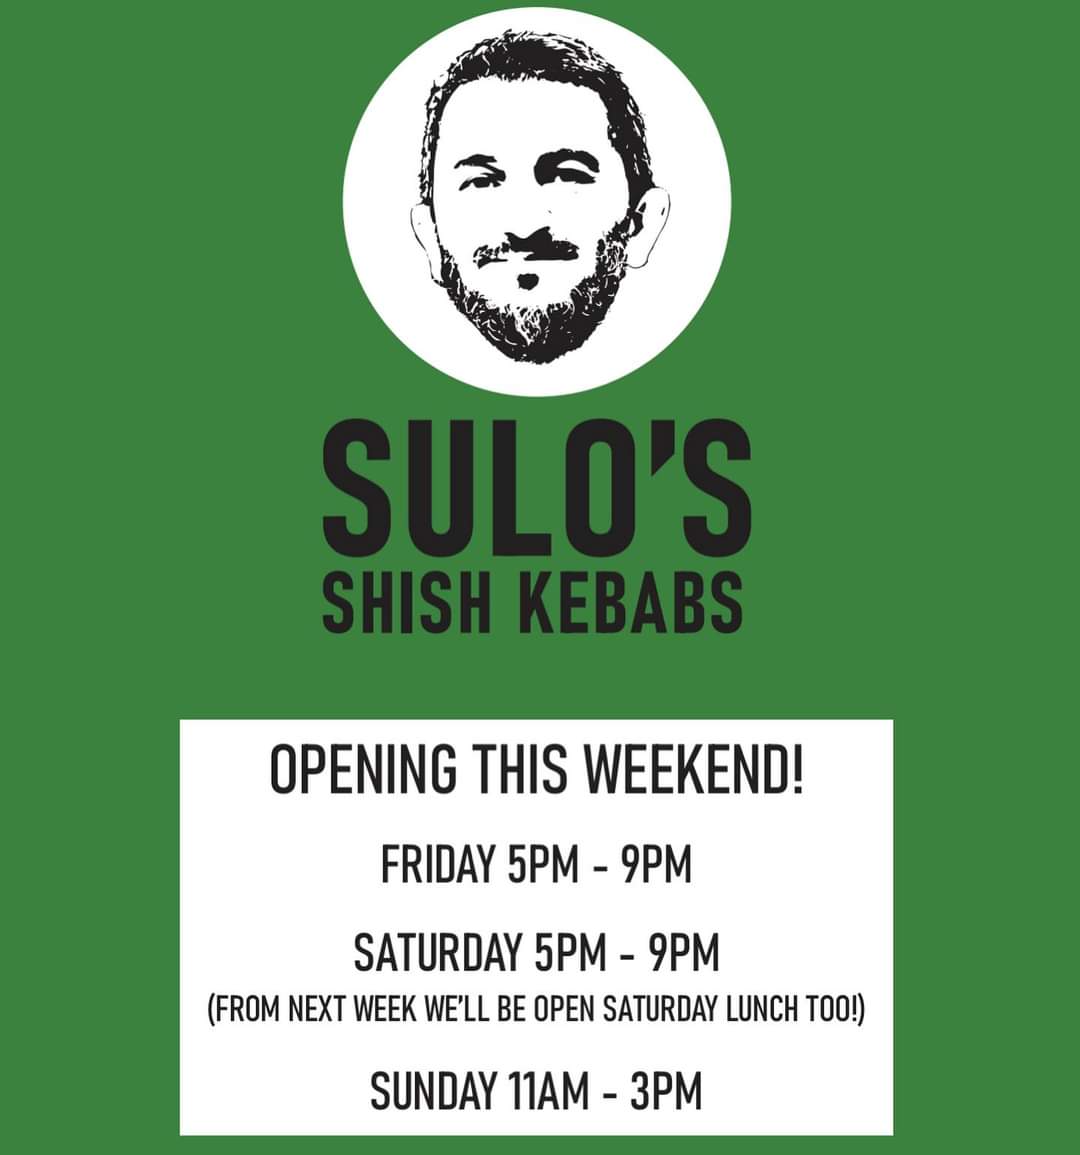 Sulo's Shish Kebabs Ettalong Beach Central Coast - NSW | OBZ Online Business Zone